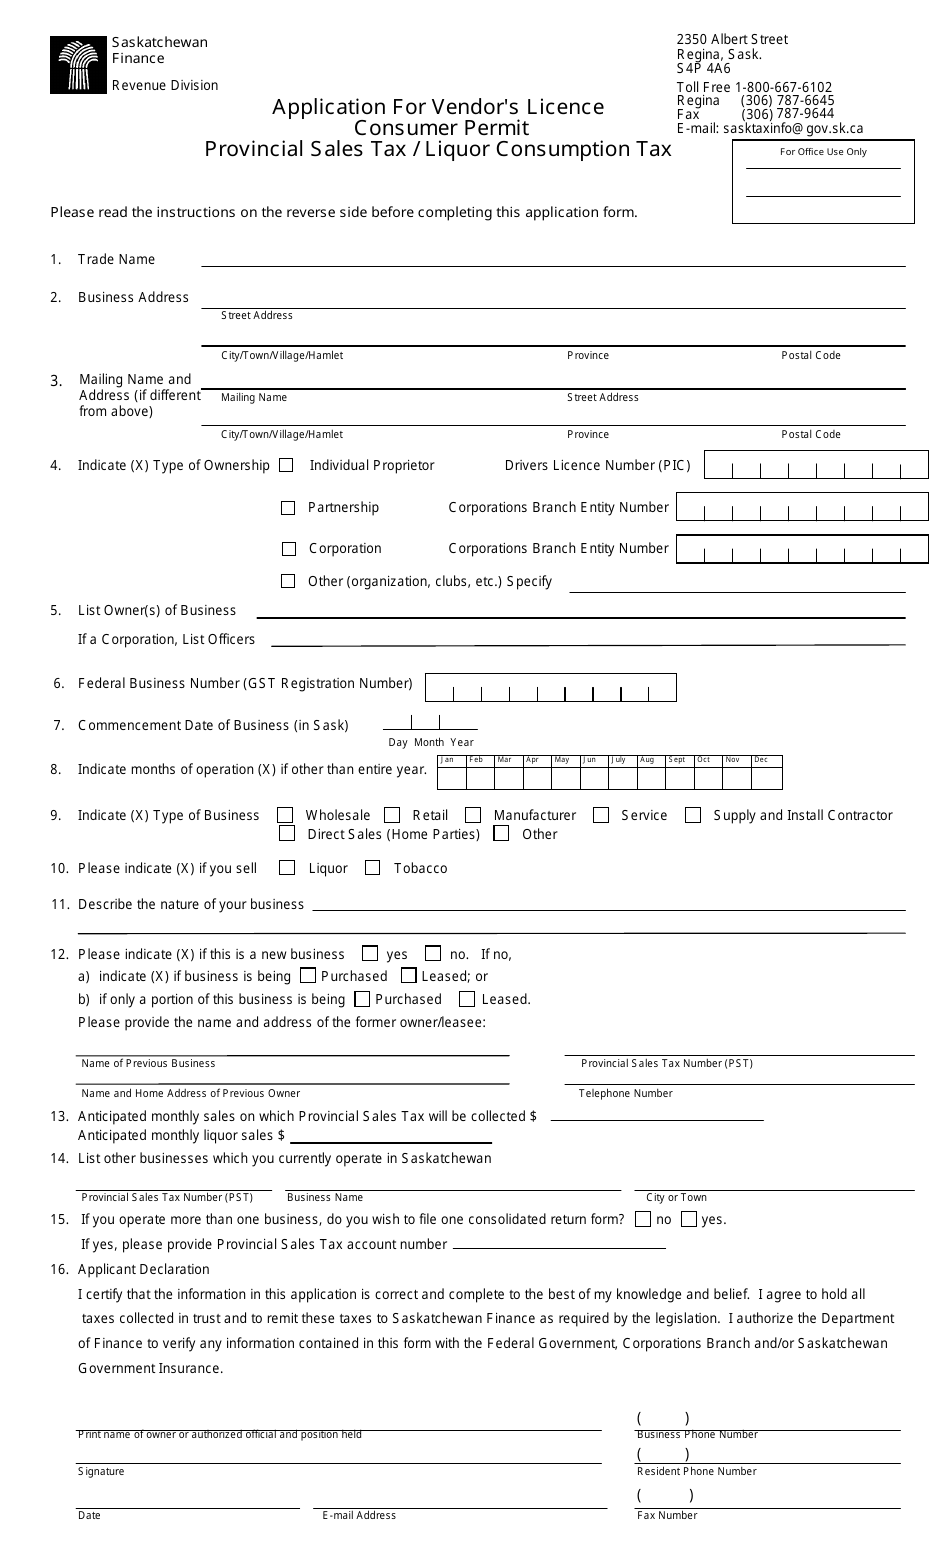 Application for Vendors Licence Consumer Permit Provincial Sales Tax / Liquor Consumption Tax - Saskatchewan, Canada, Page 1